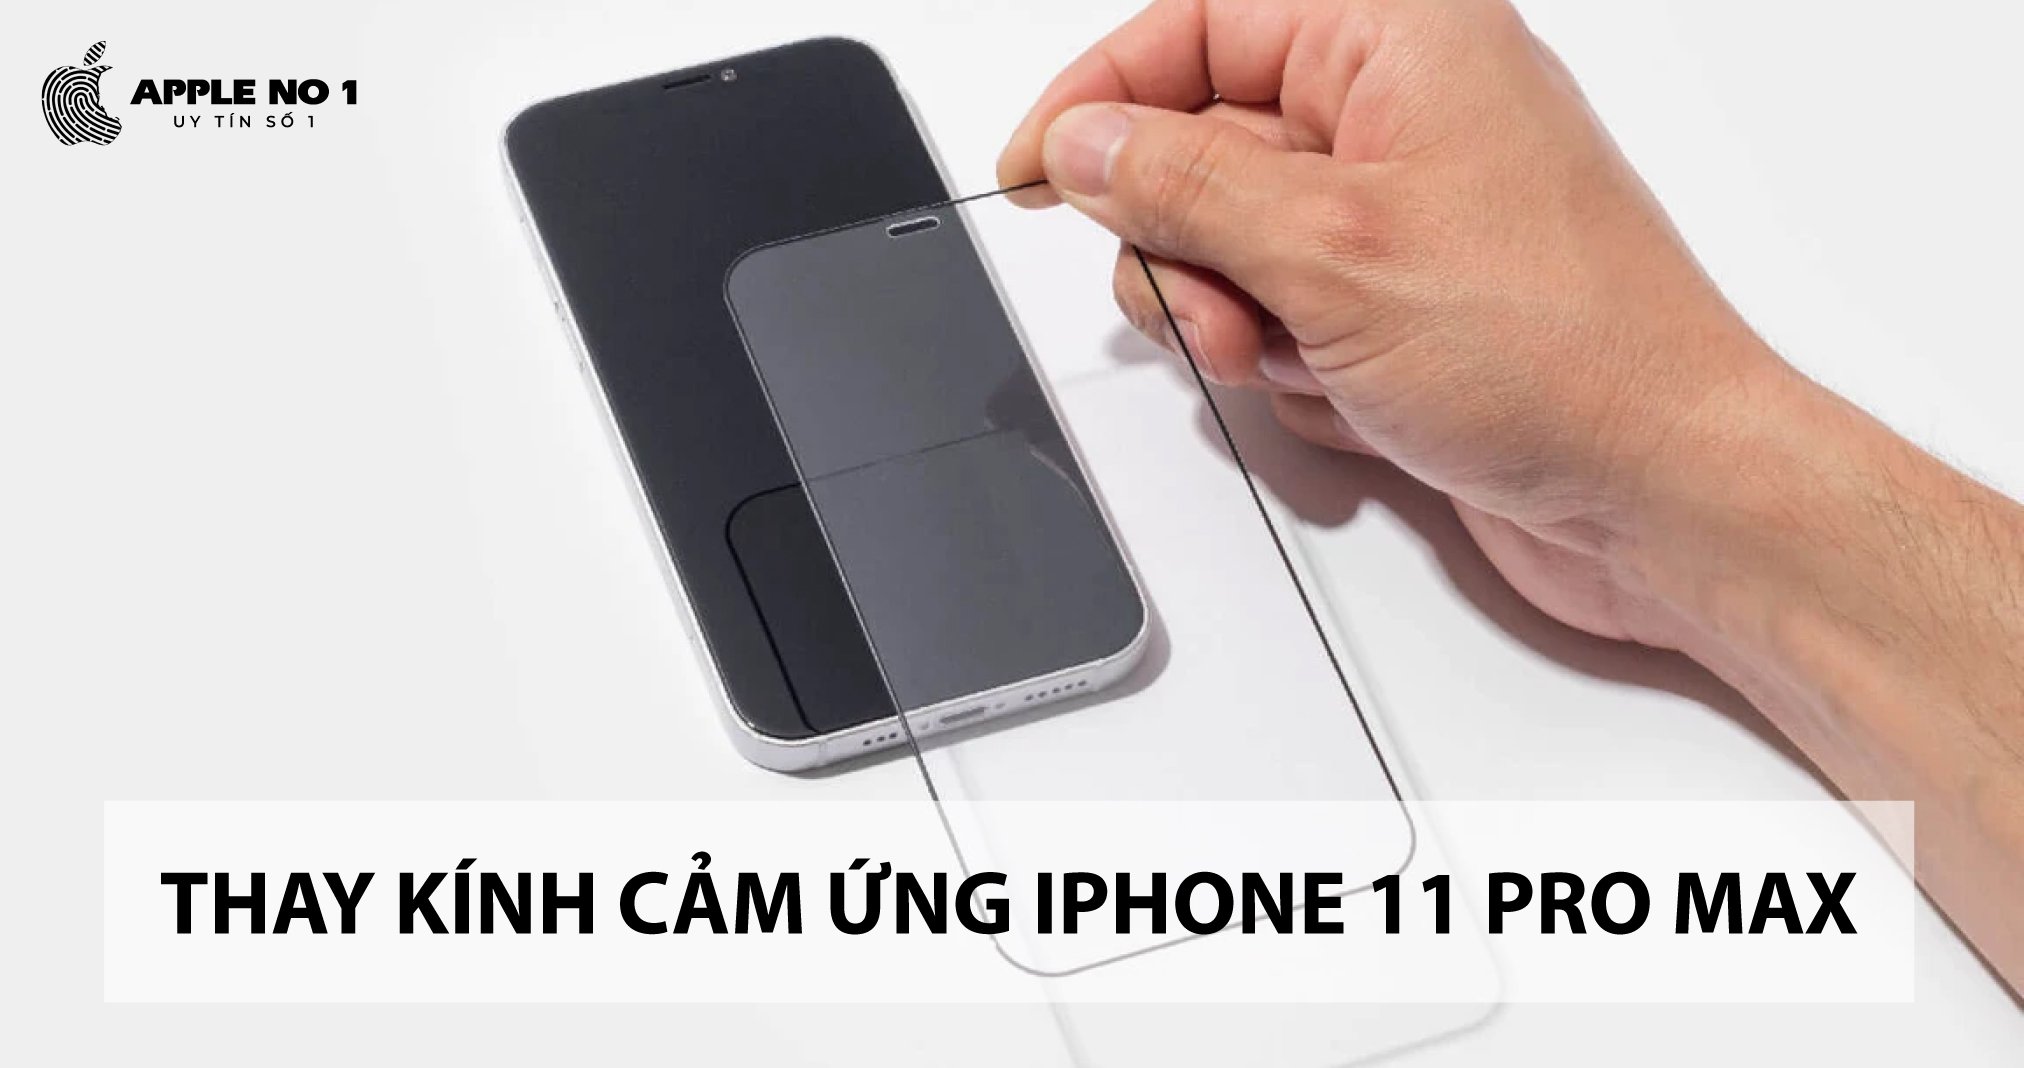 thay kinh cam ung iphone 11 pro max chinh hang Ha Noi